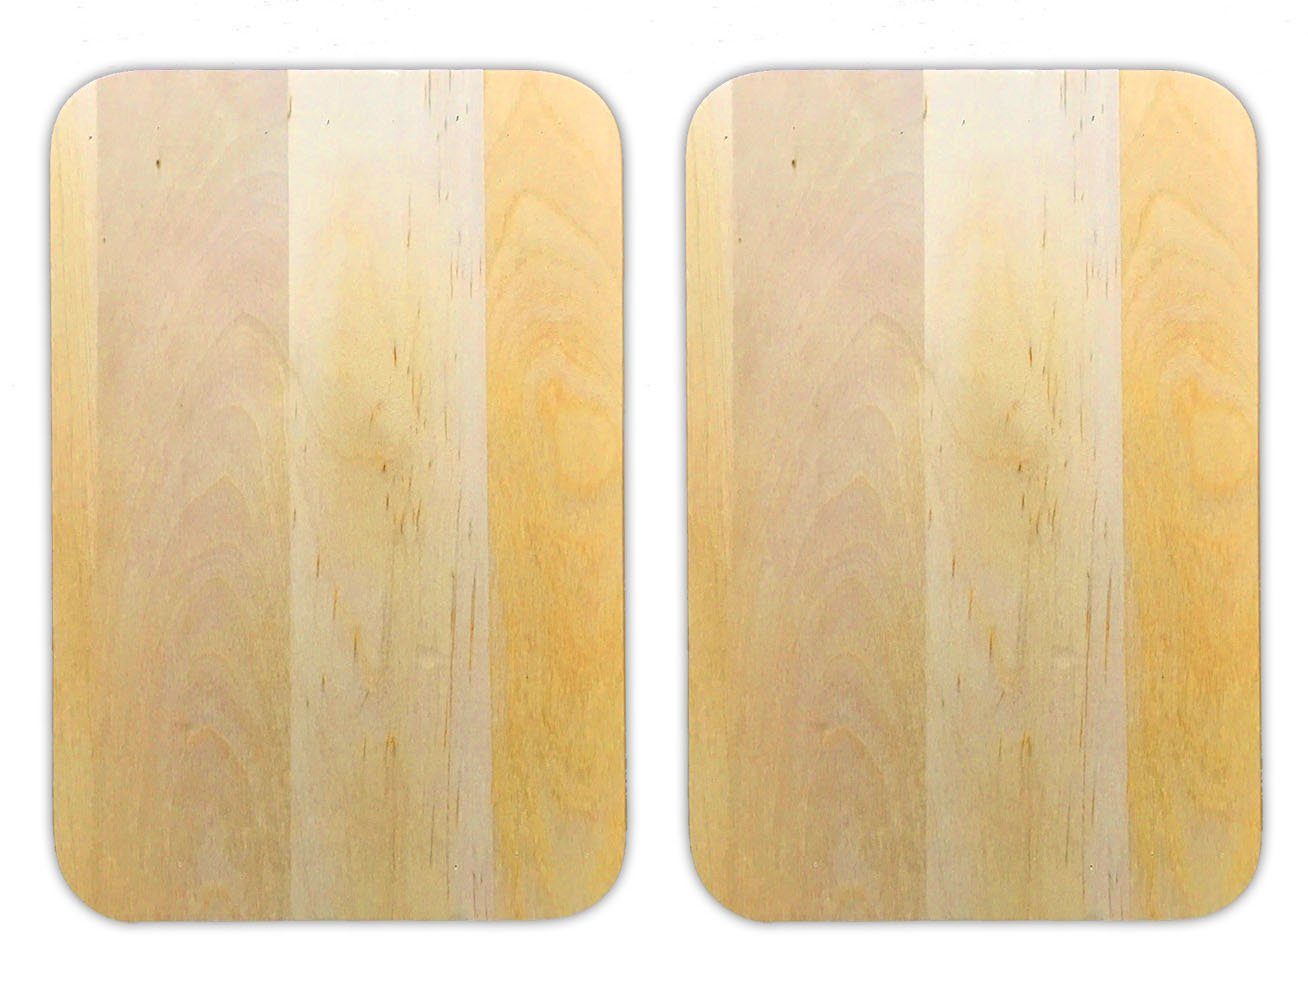 HAC24 Schneidebrett Servierbrett Küchenbrett Holz Schneide Brett Brettchen, Naturholz, (2-St), Beidseitig Verwendbar 22 x 15 x 1 cm